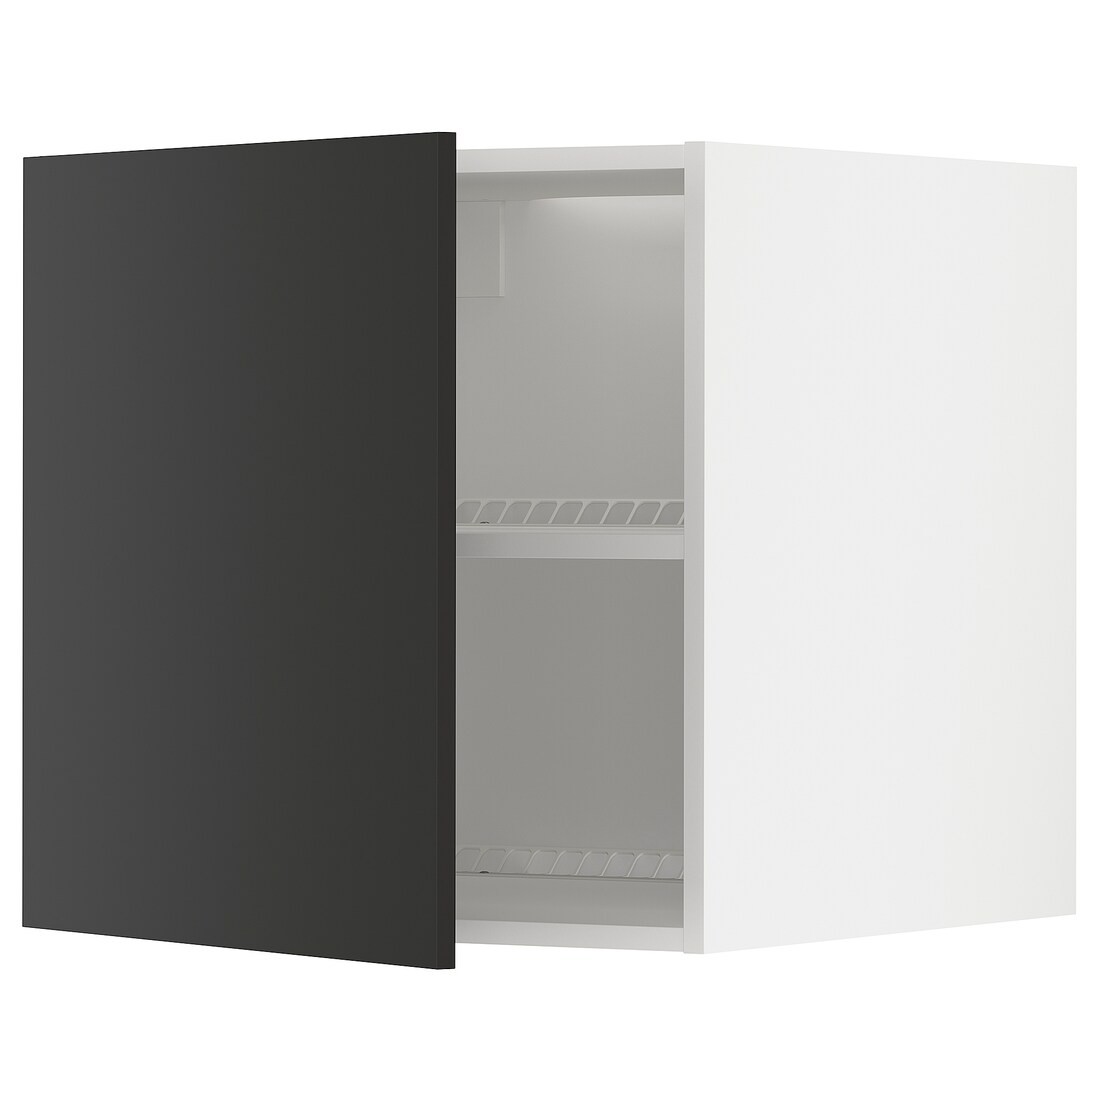 METOD МЕТОД Верхний шкаф для холодильника / морозильника, белый / Nickebo матовый антрацит, 60x60 см